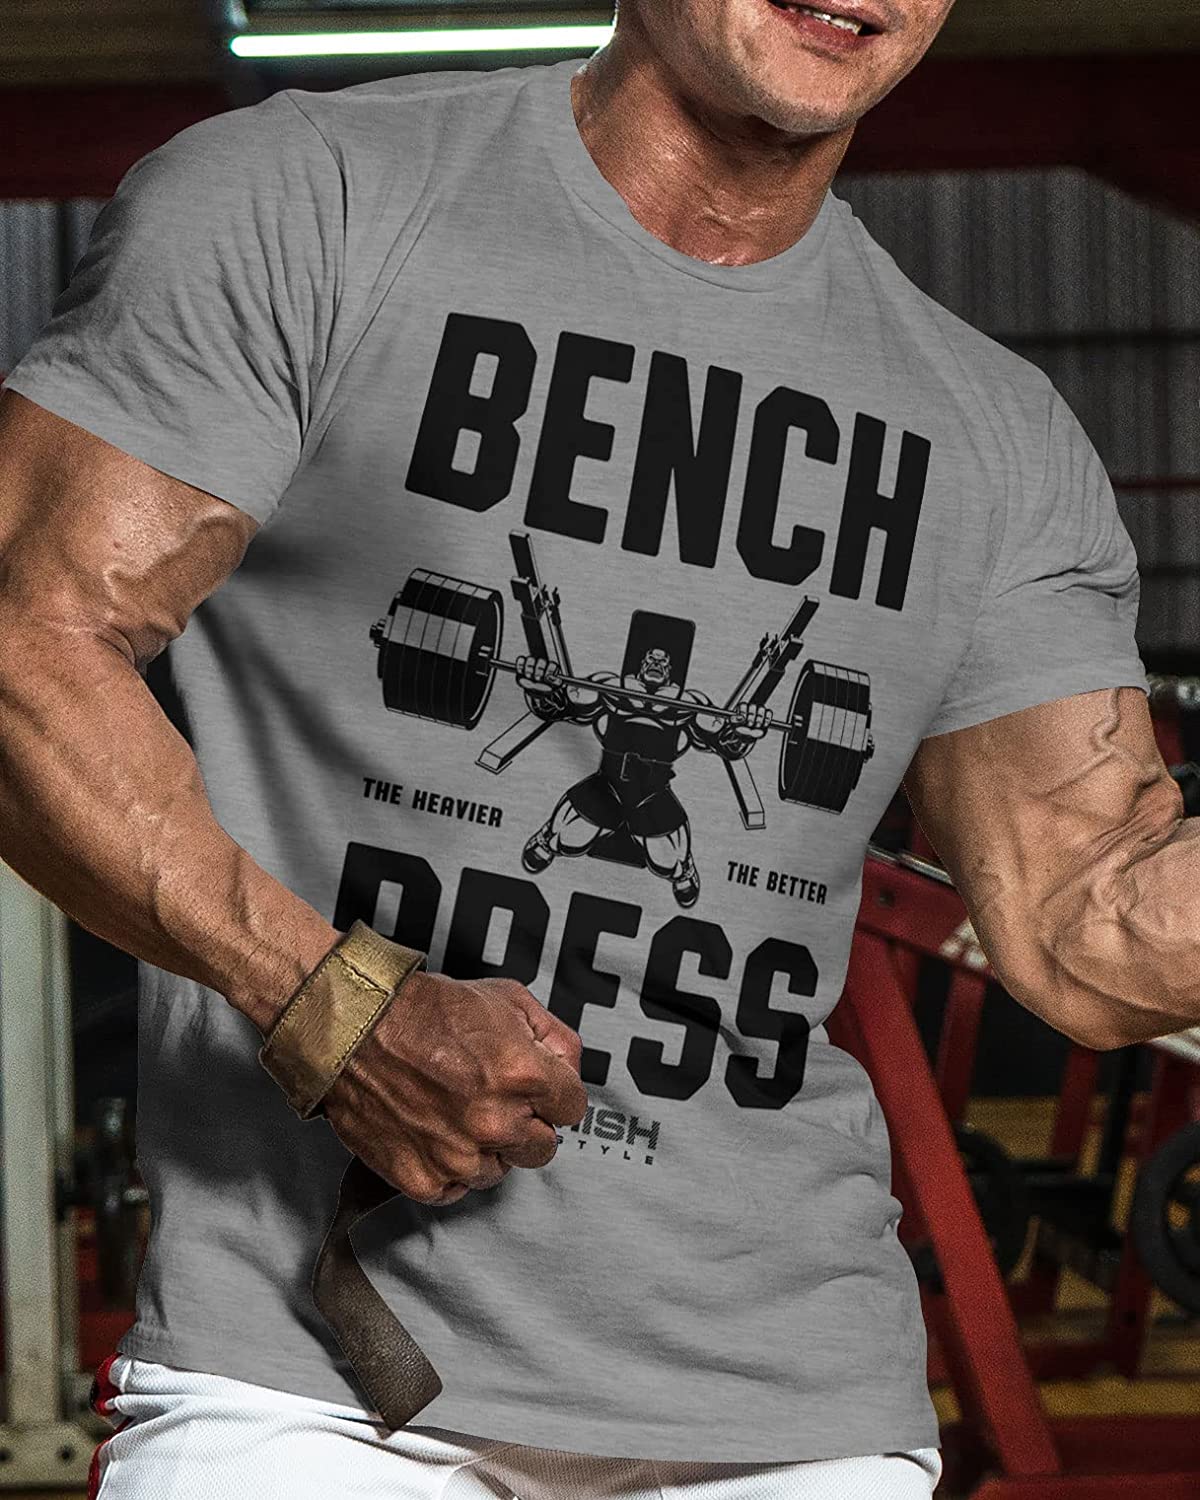 025. Bench Press Workout T-Shirt